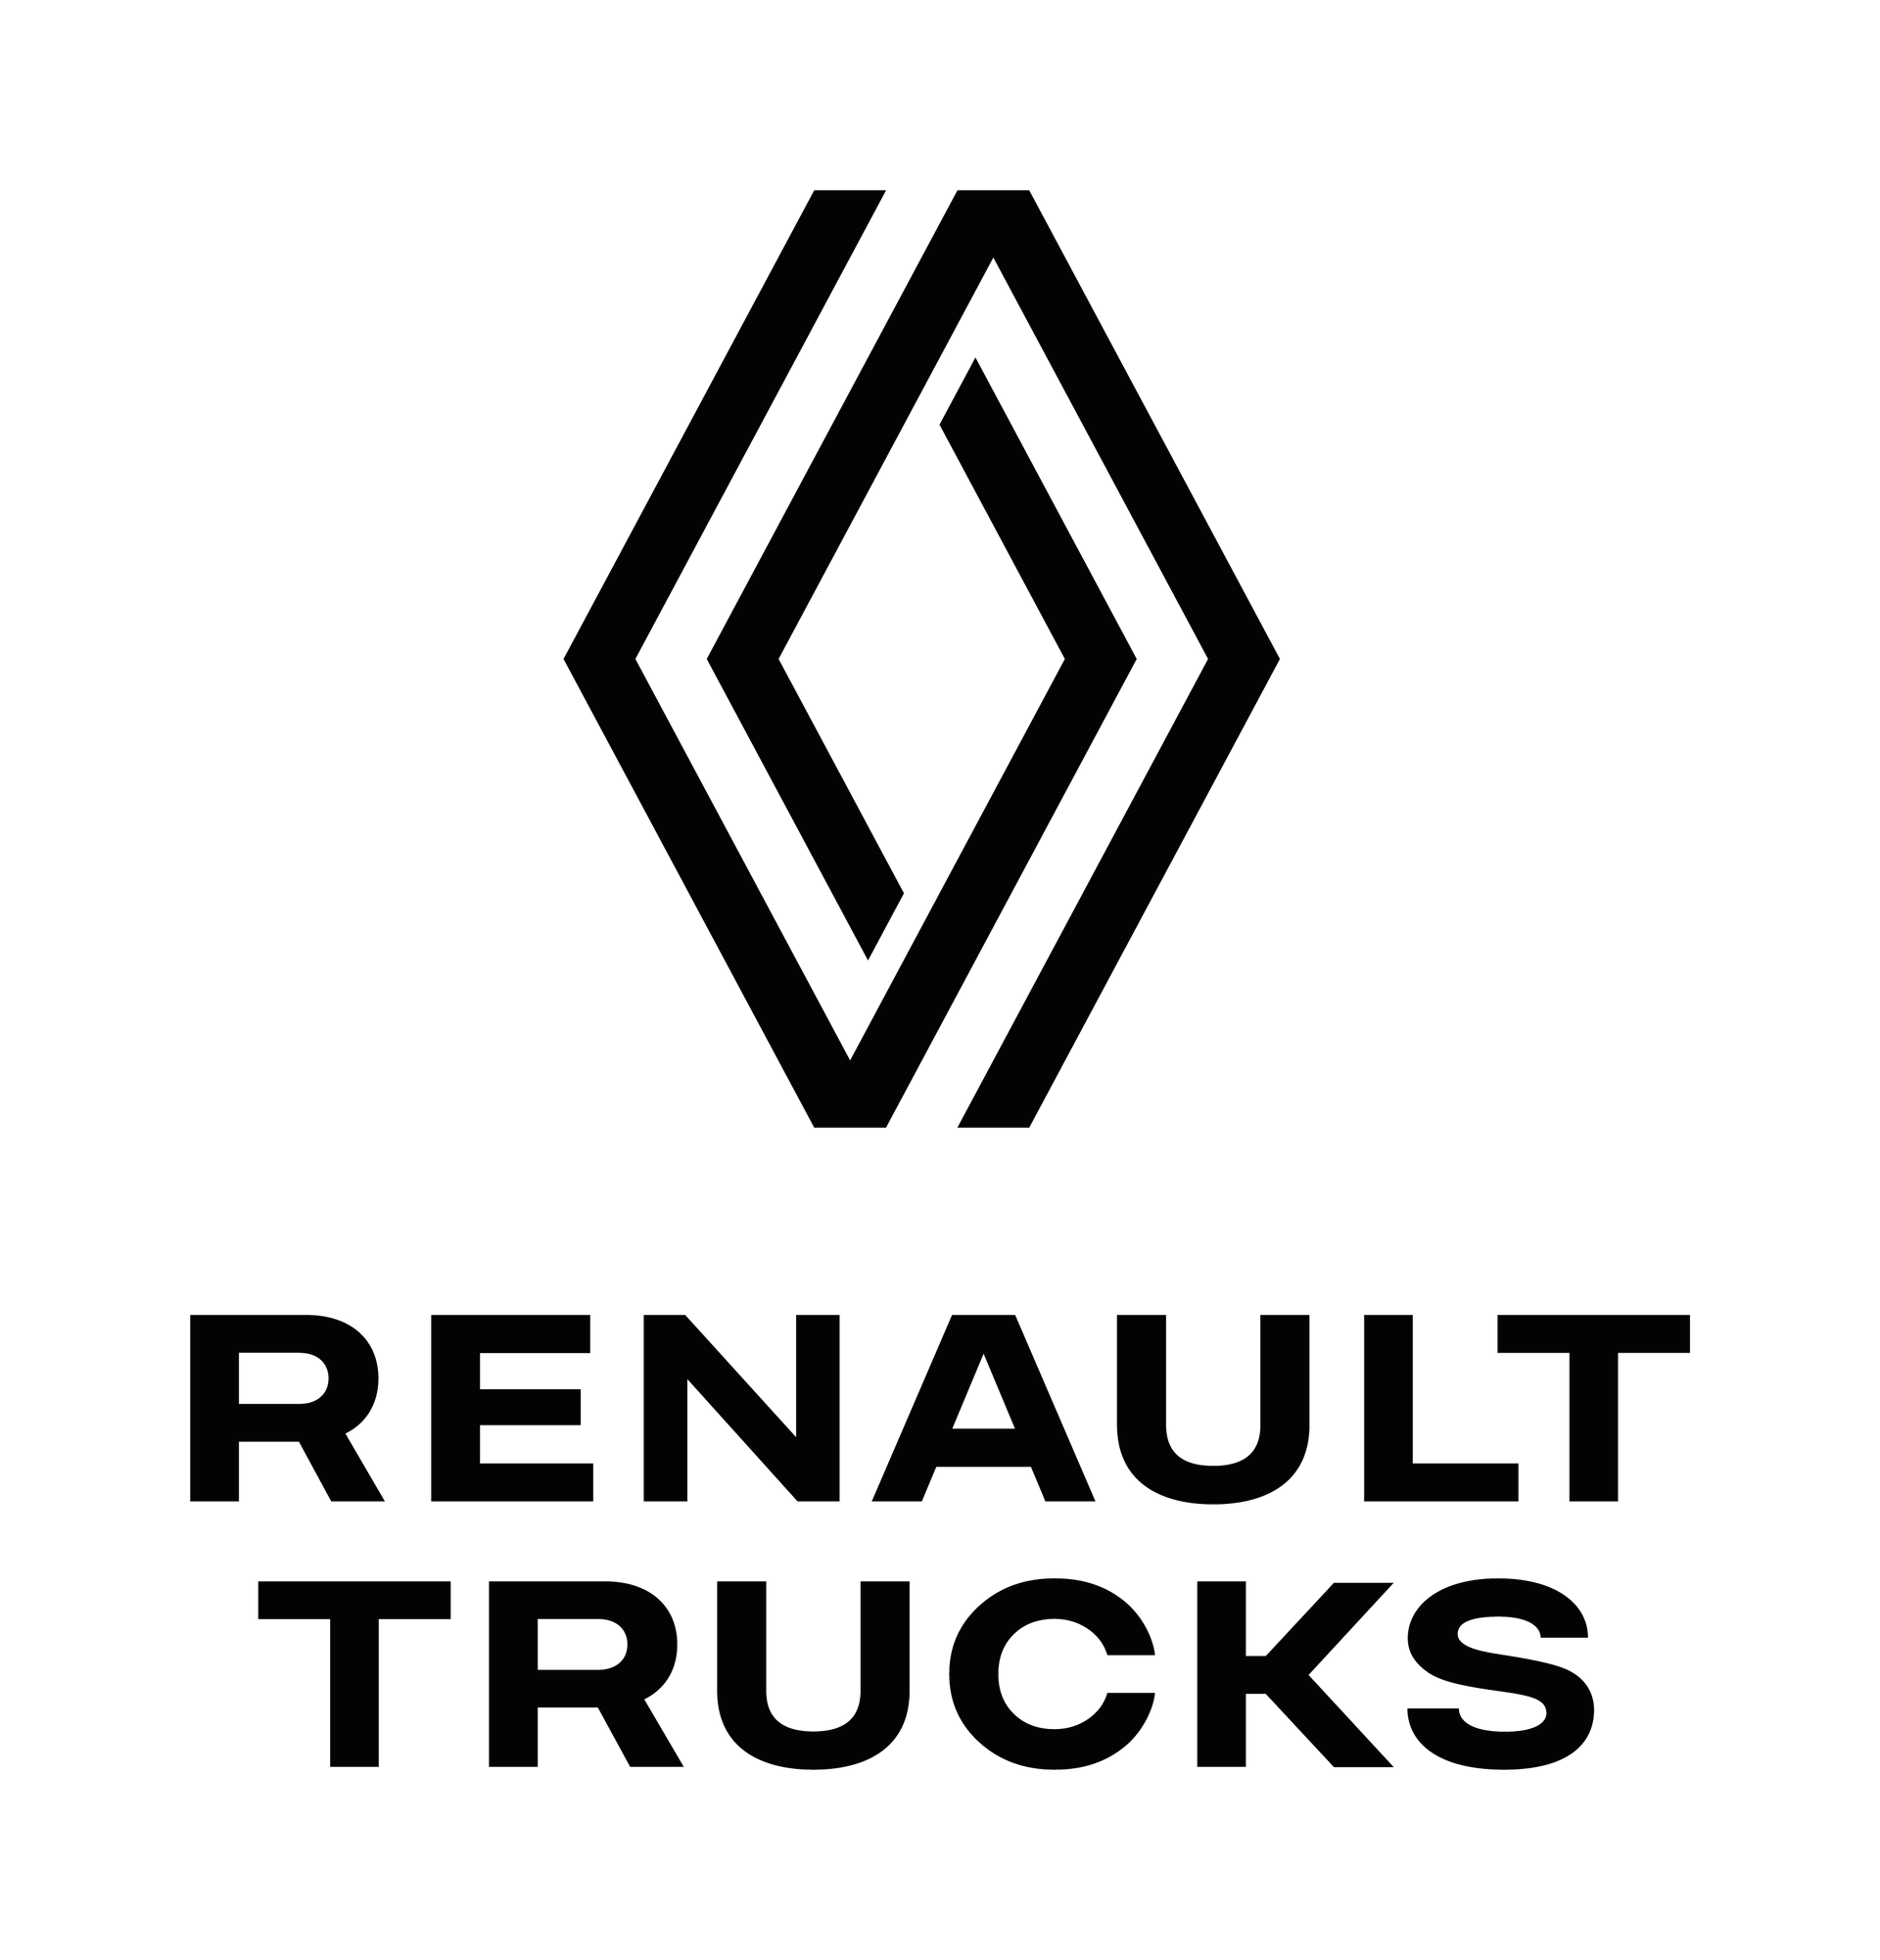 B&W Utilitaires SA Givisiez - Agent Renault Trucks